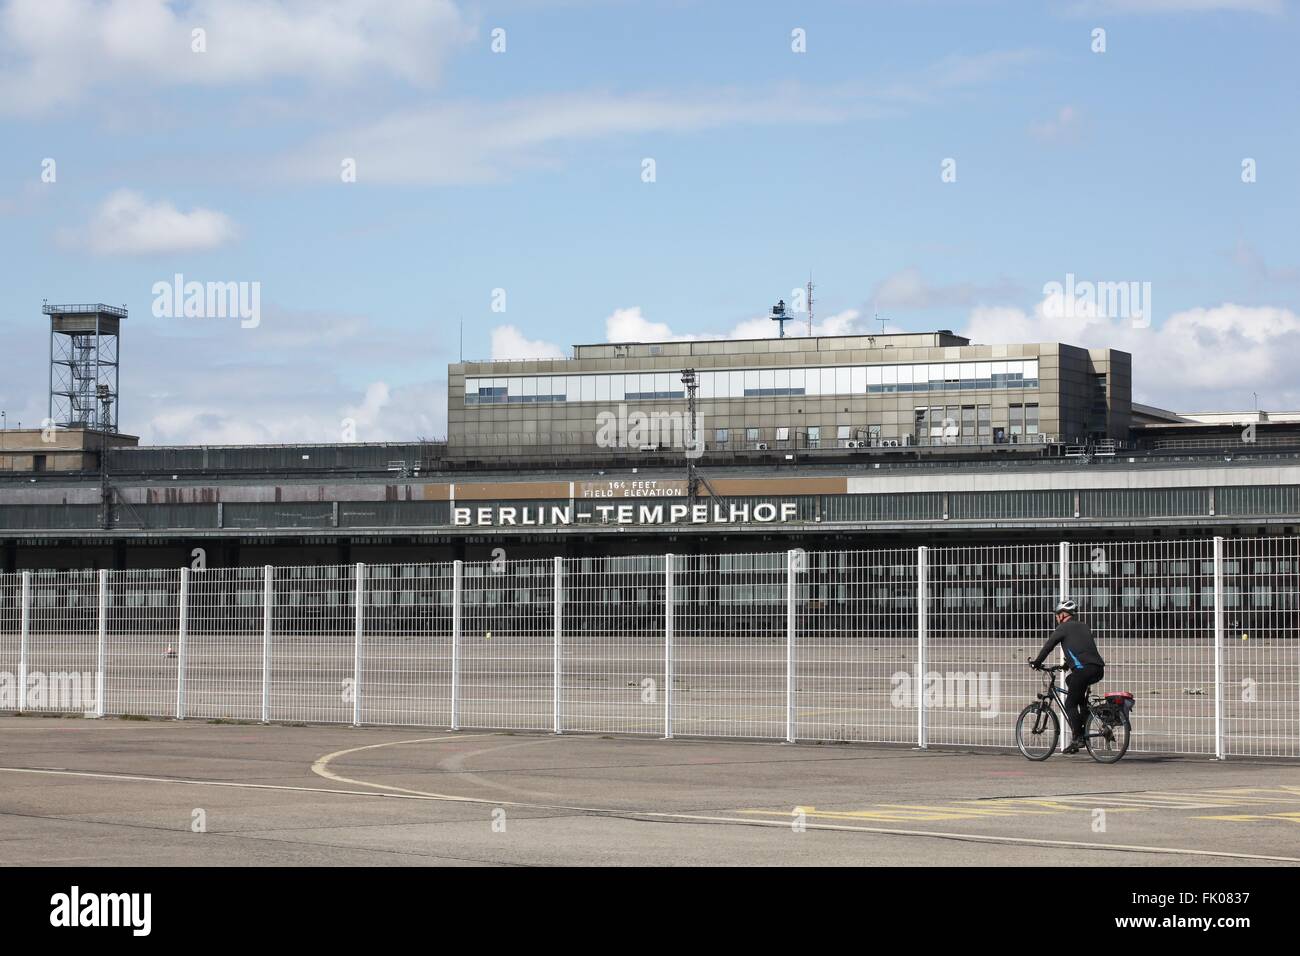 Berlin Tempelhof airport in Germany Stock Photo